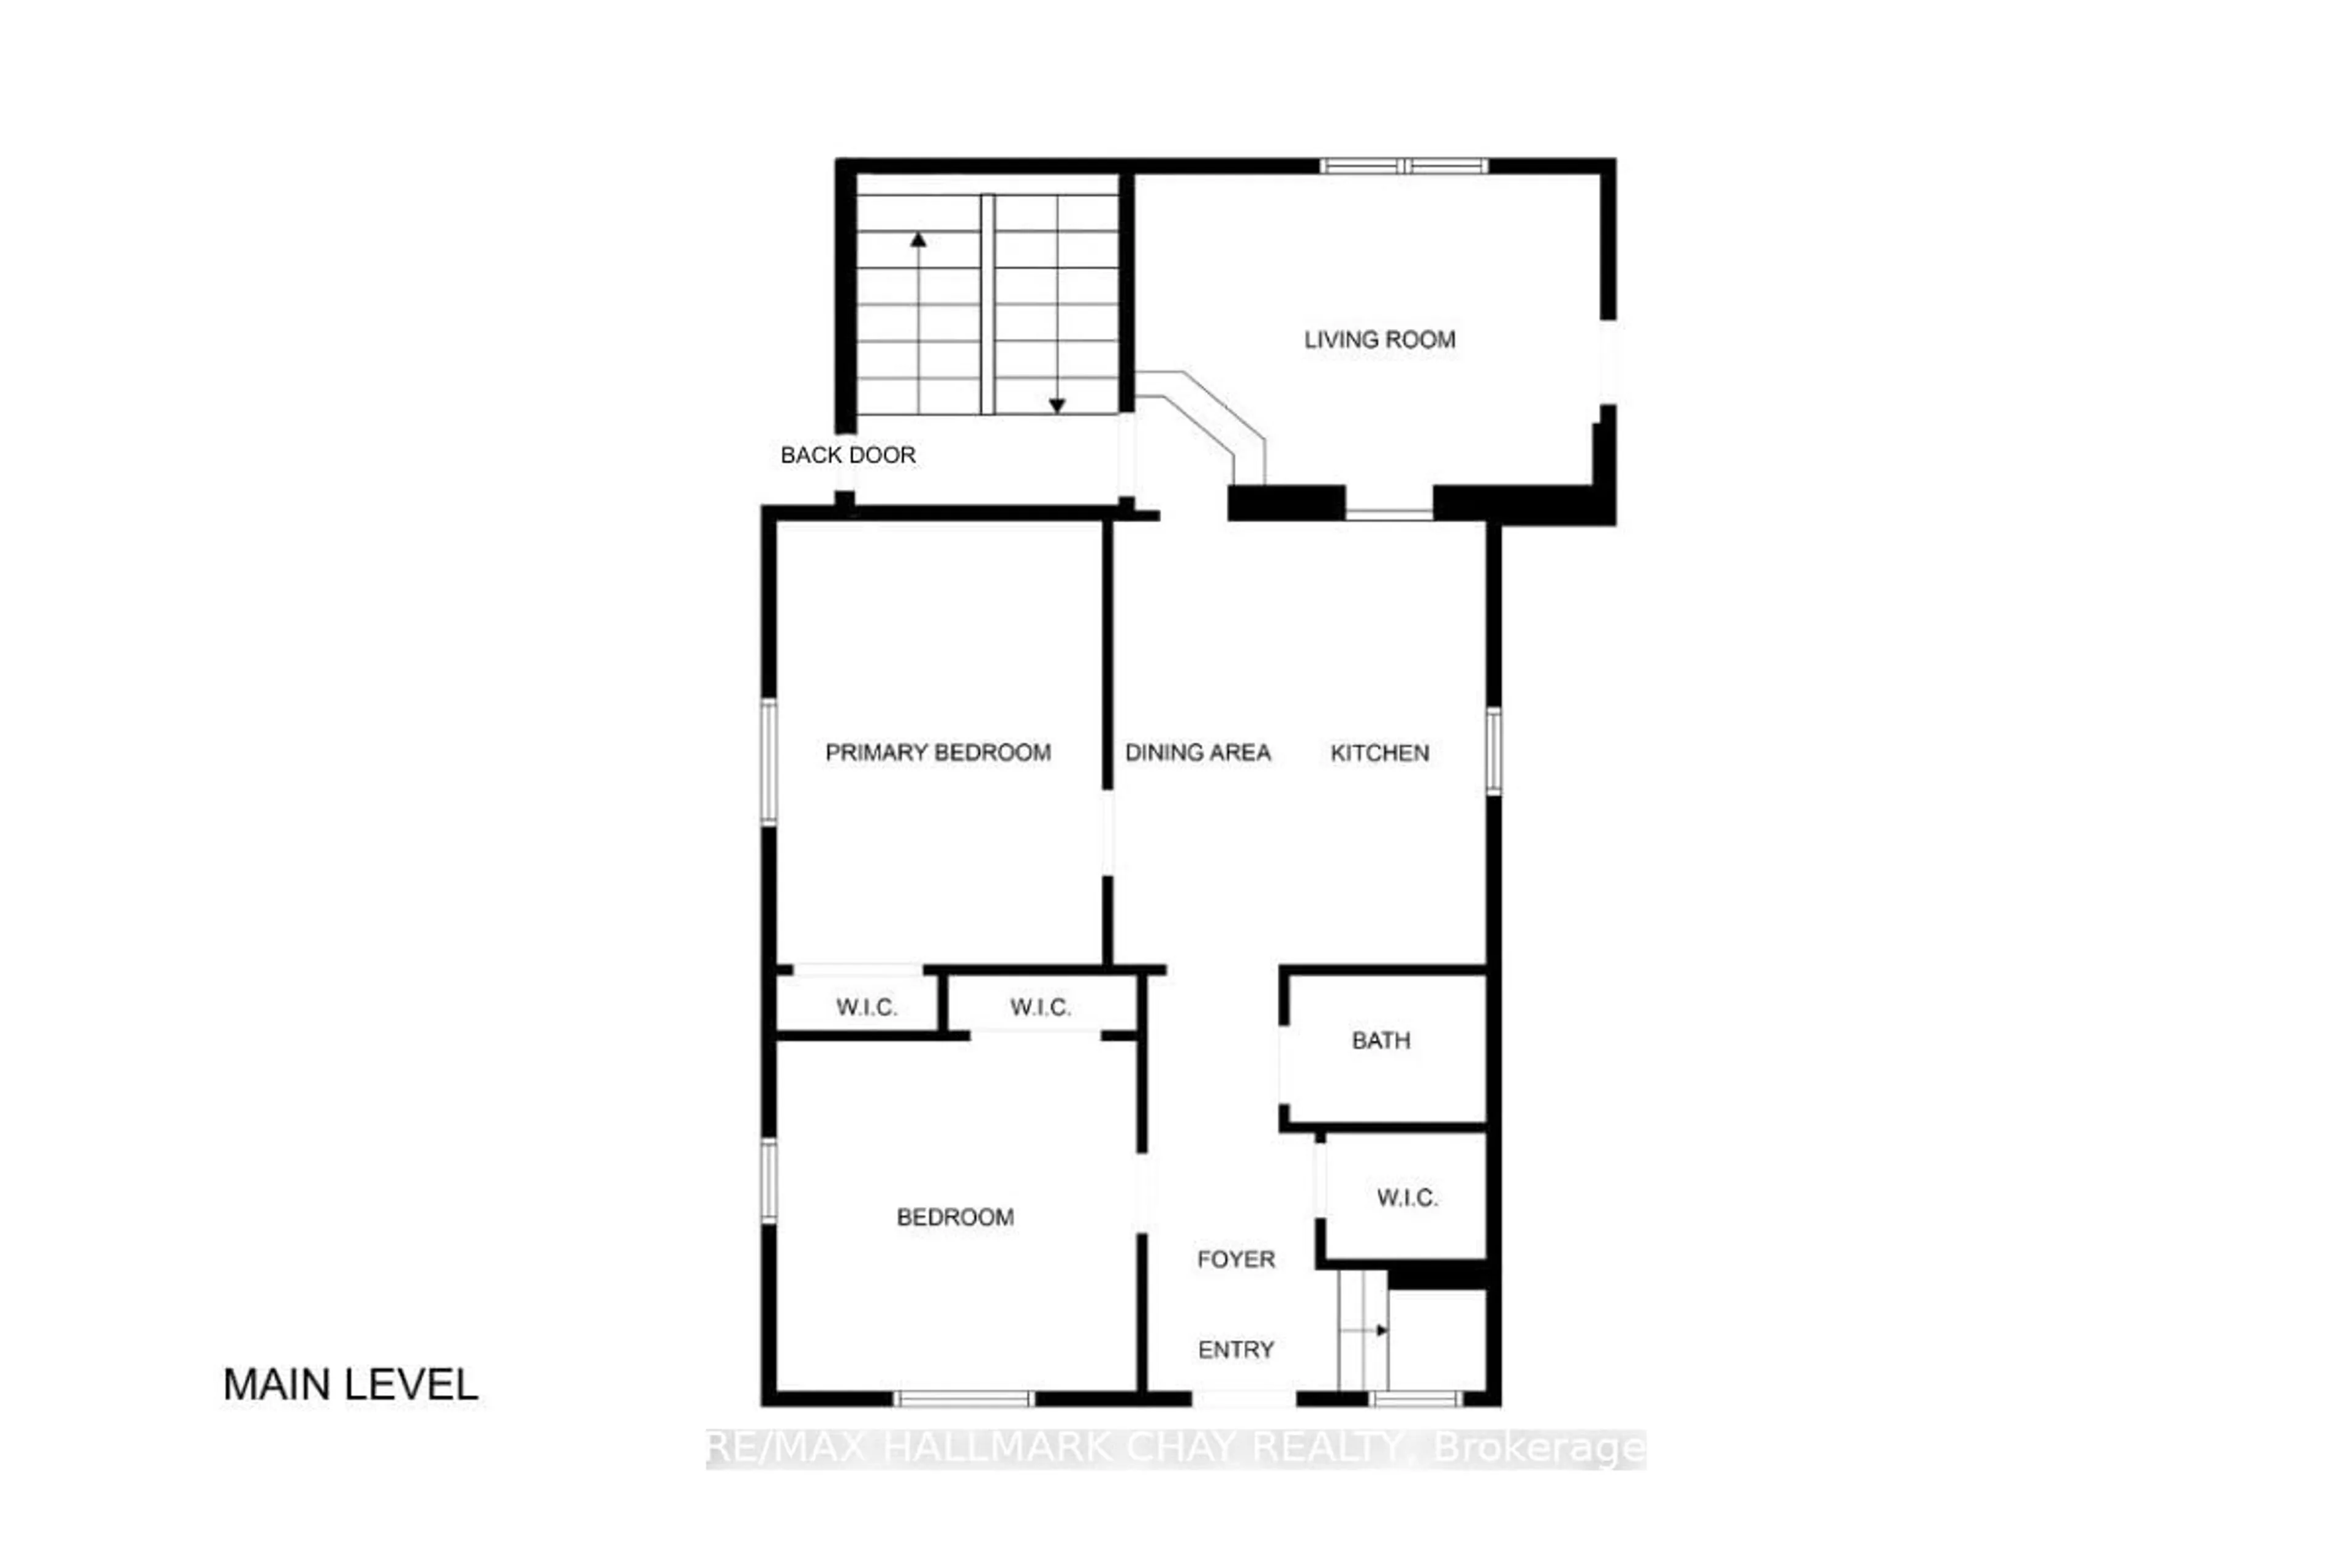 Floor plan for 438 Hugel Ave, Midland Ontario L4R 1V3